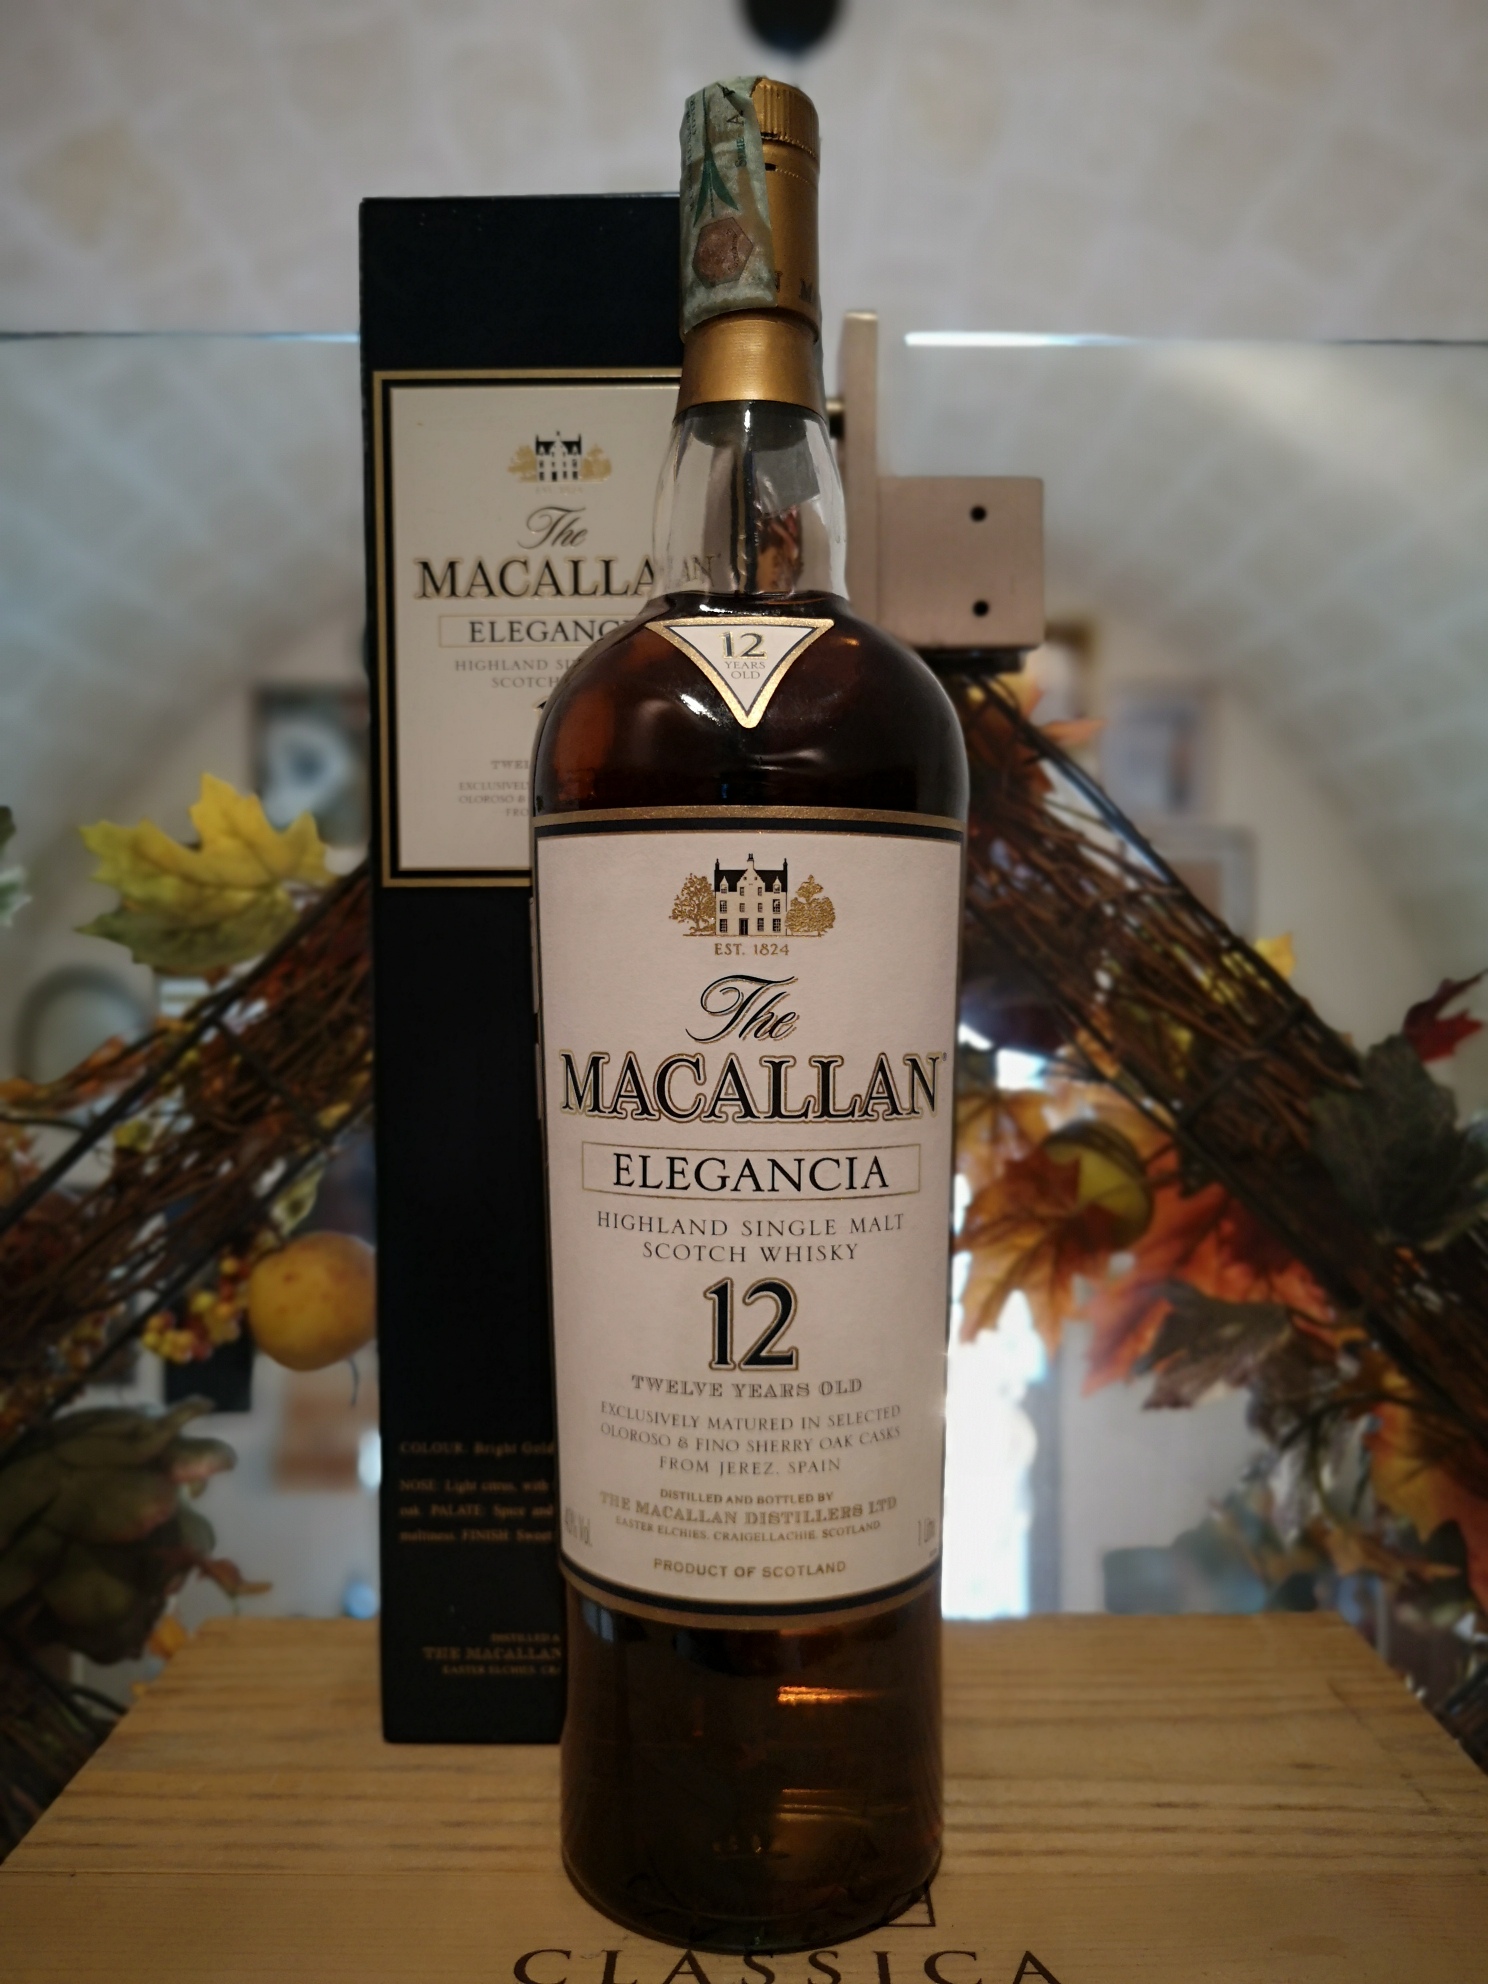 The Macallan Highland Single Malt Scotch Whisky 12 YO Elegancia